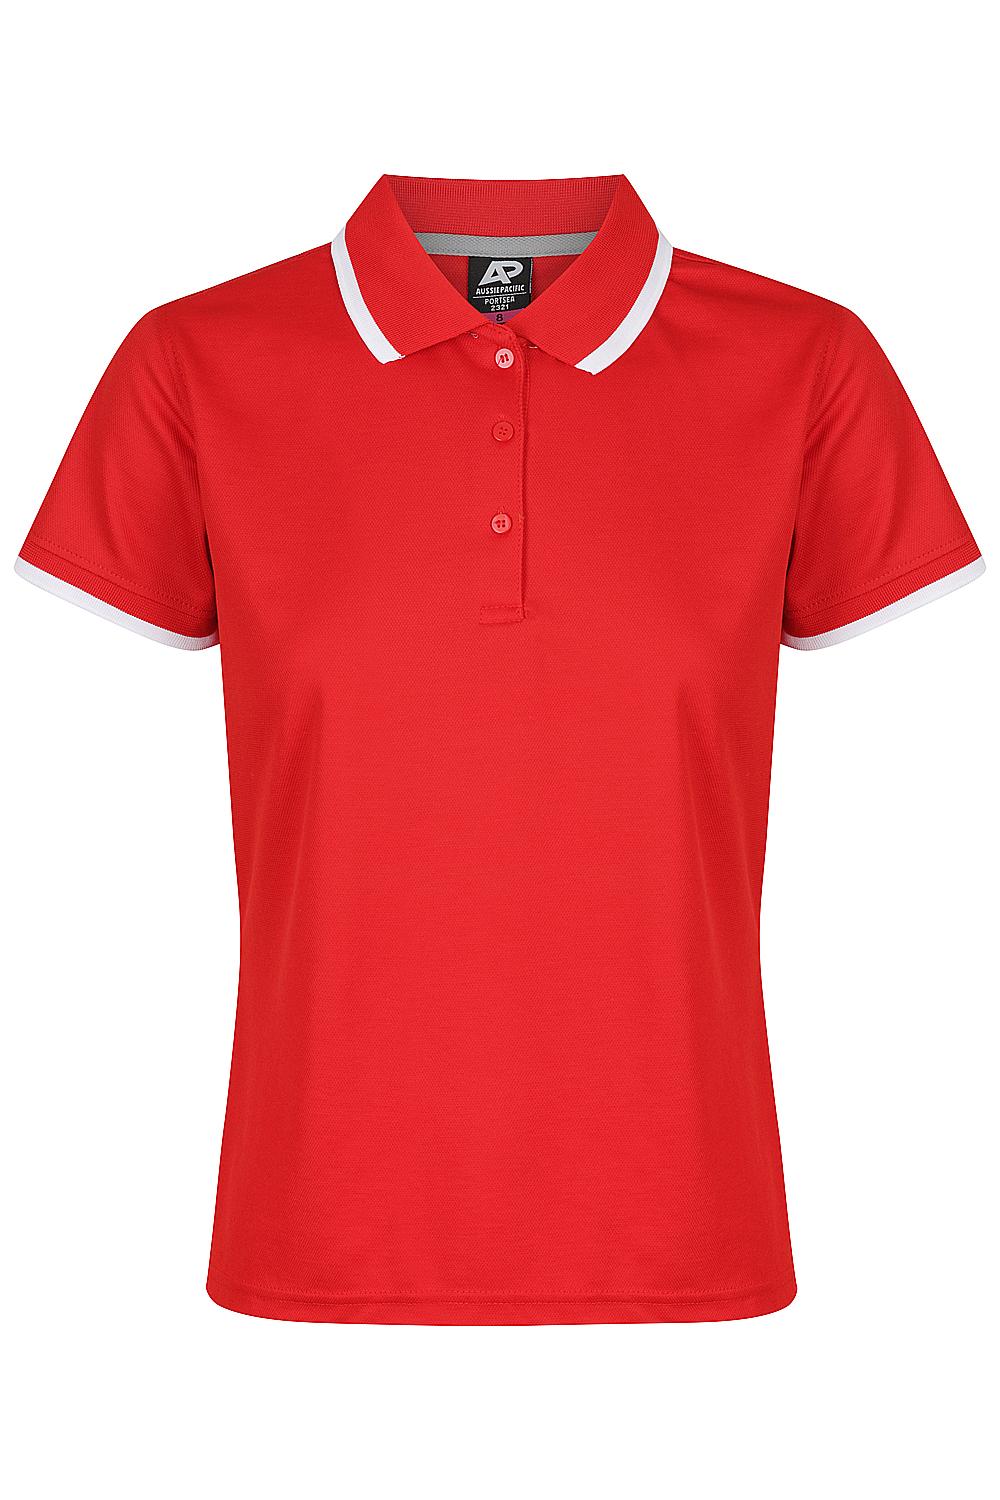 Custom Ladies Portsea Work Shirts - Red/White